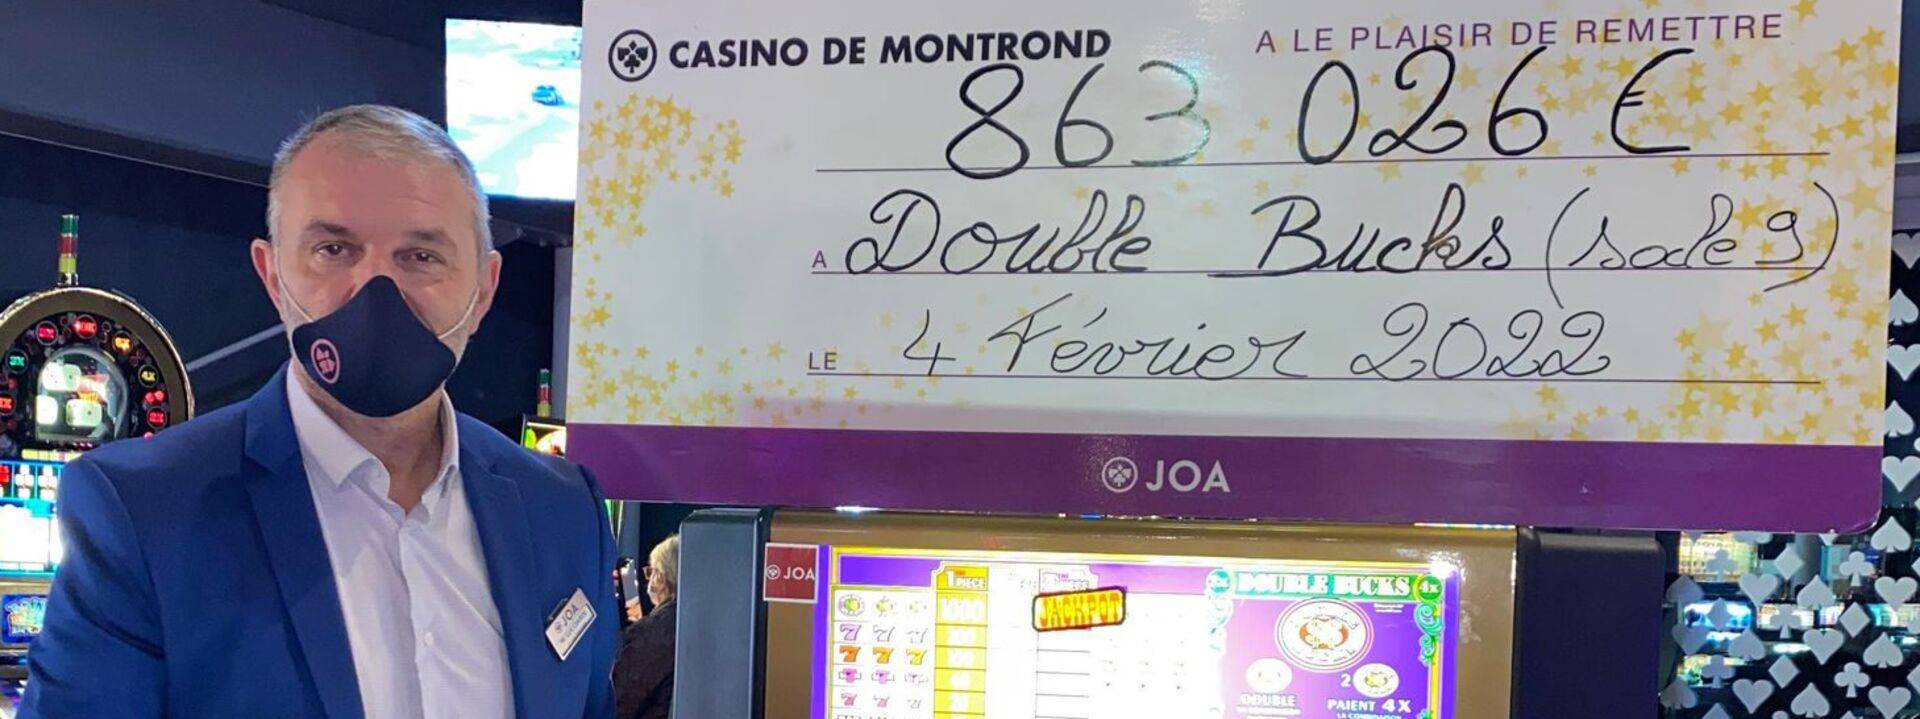 Jackpot Montrond Maxime